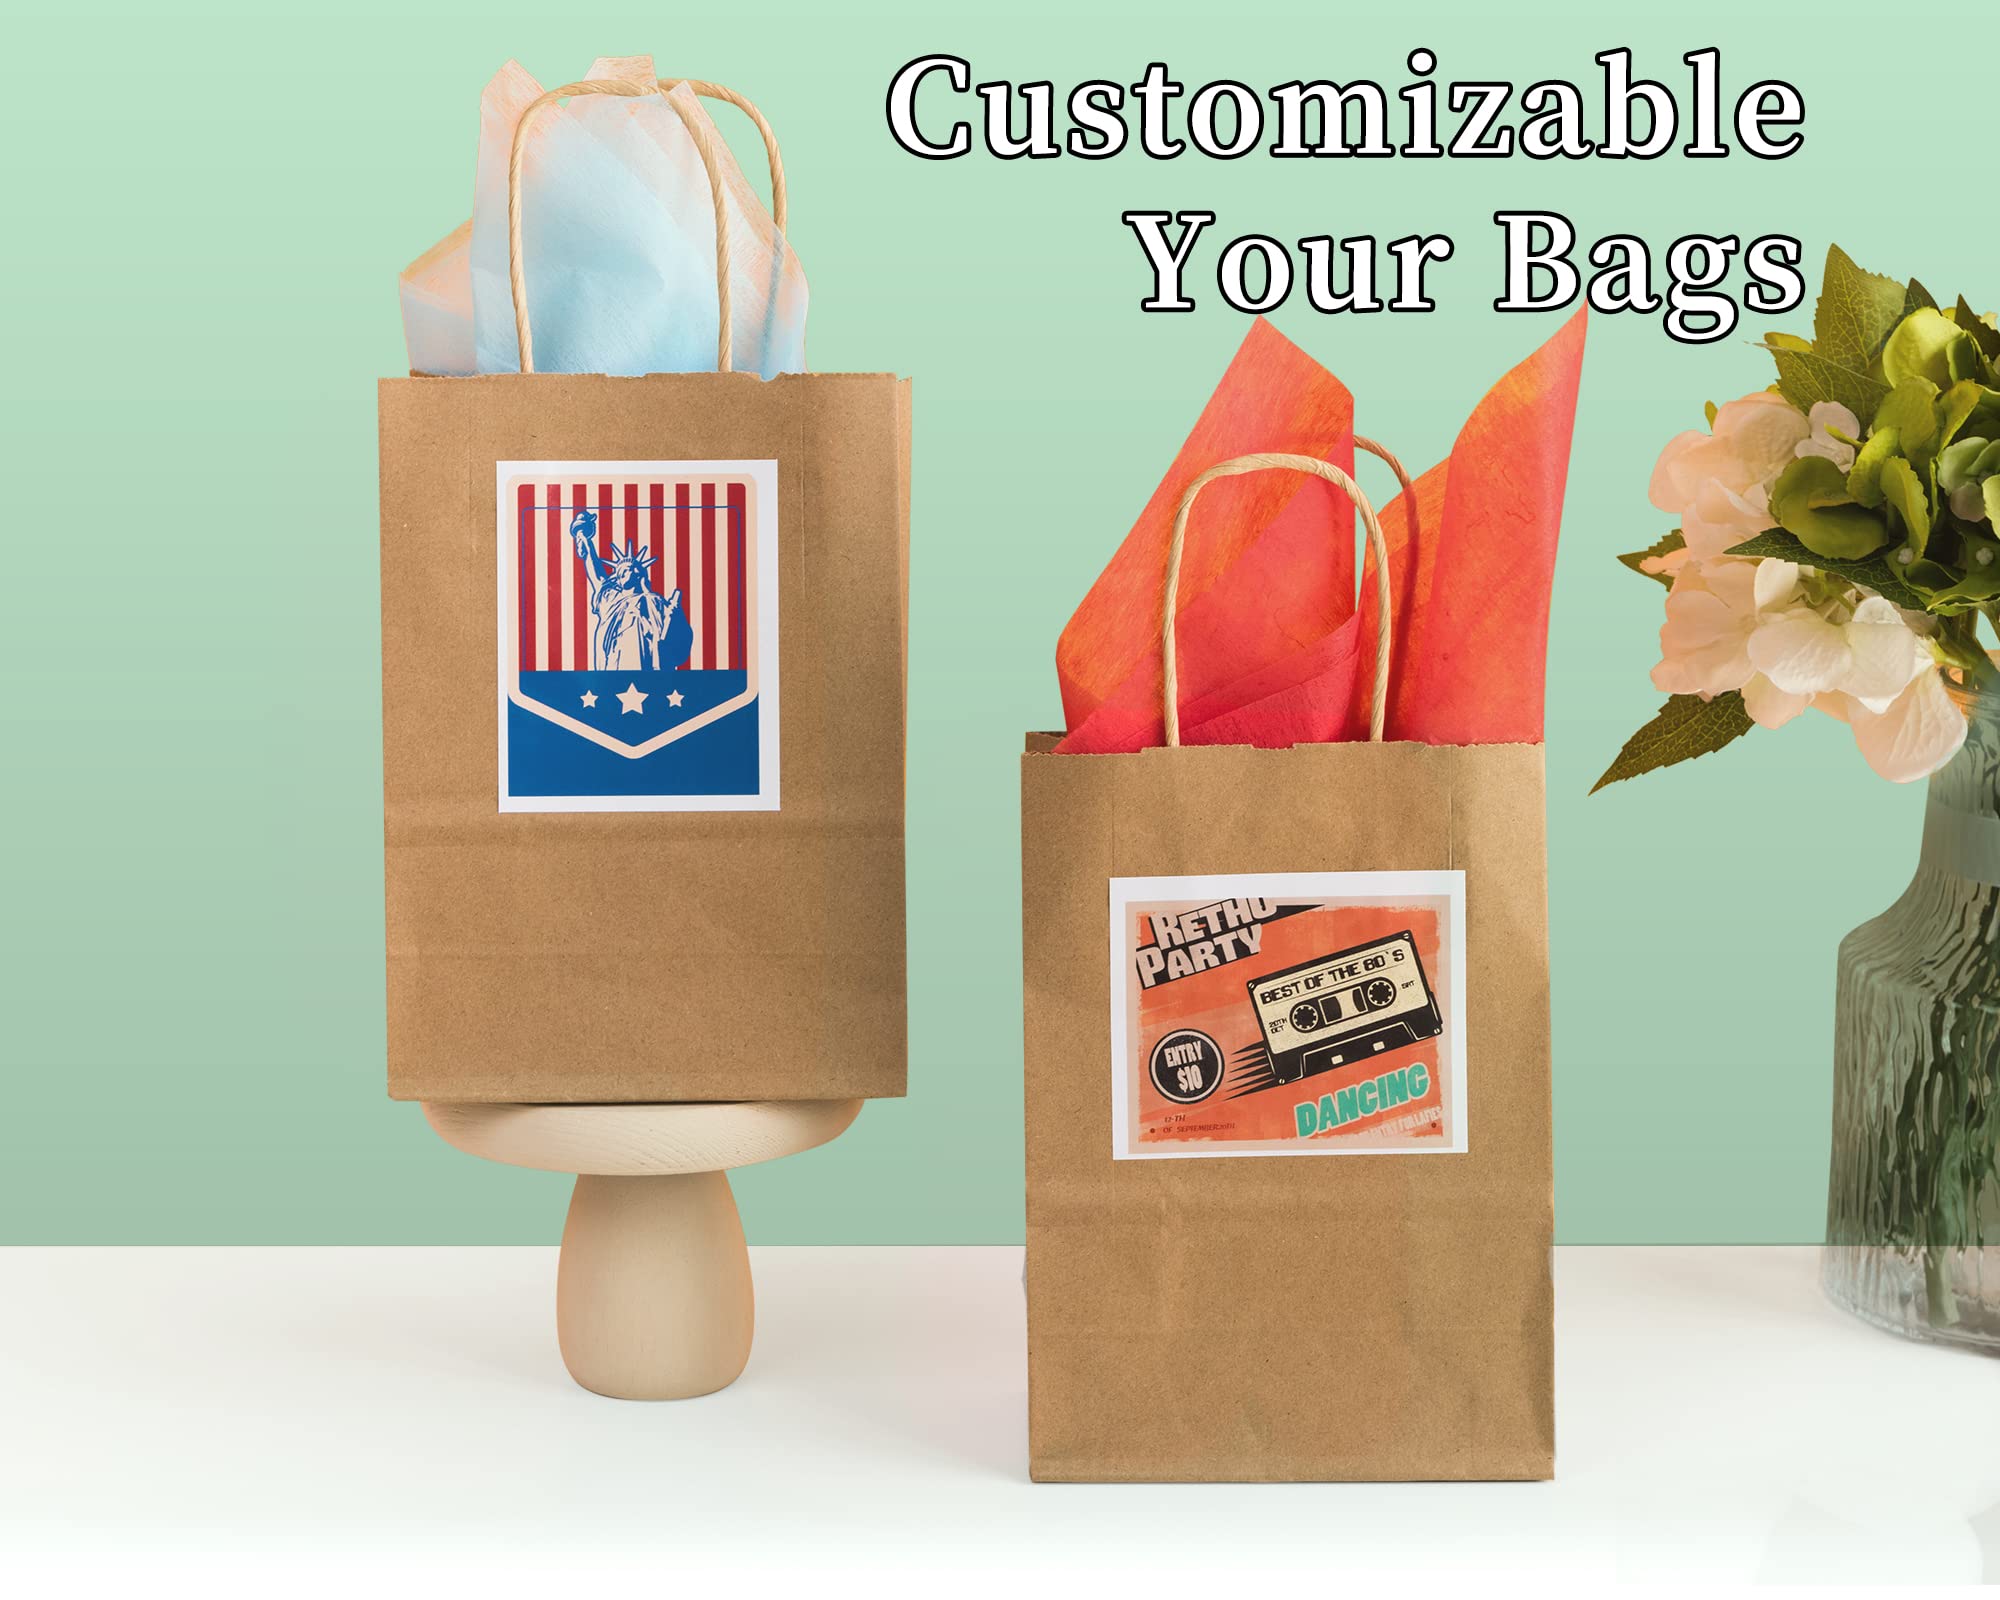 RACETOP Brown Paper Bags with Handles Bulk 100Pcs 8x4.5x10.8 Inch Gift Bags, Brown Kraft Paper Bags, Gift Bags Bulk, Retail Bags, Party Bags, Shopping Bags, Favor Bags